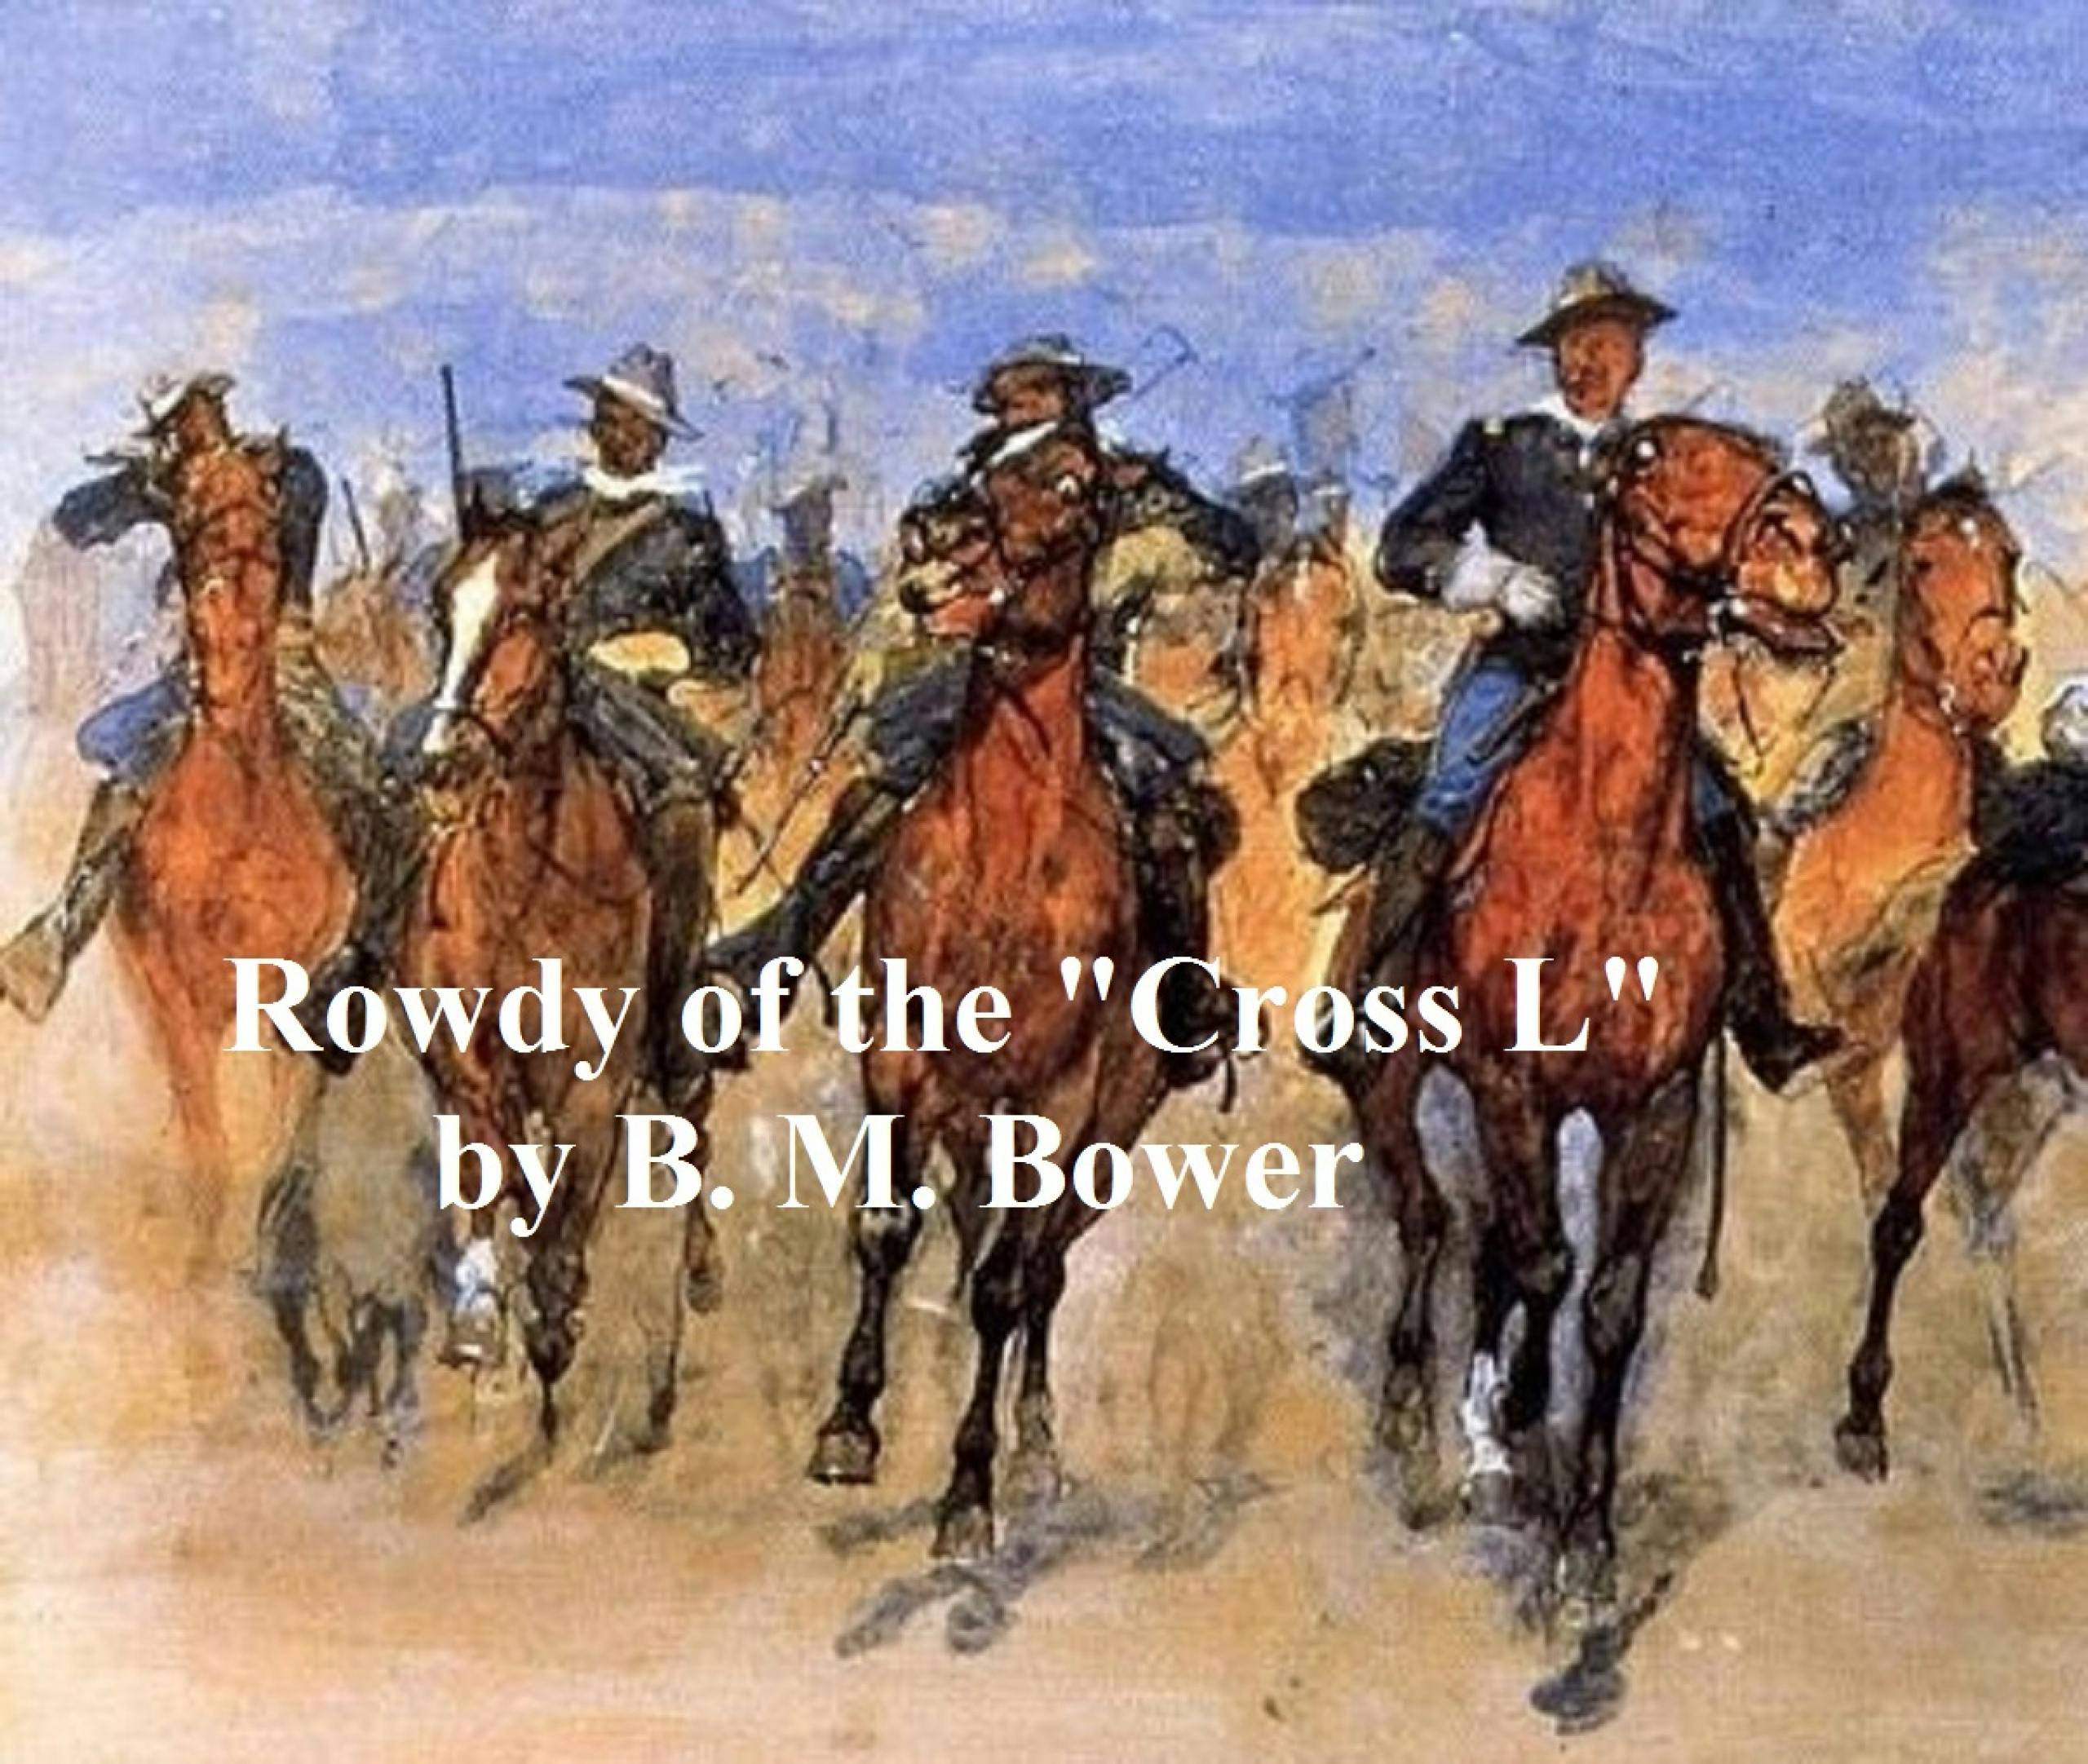 Rowdy of the "Cross L" - B. M. Bower